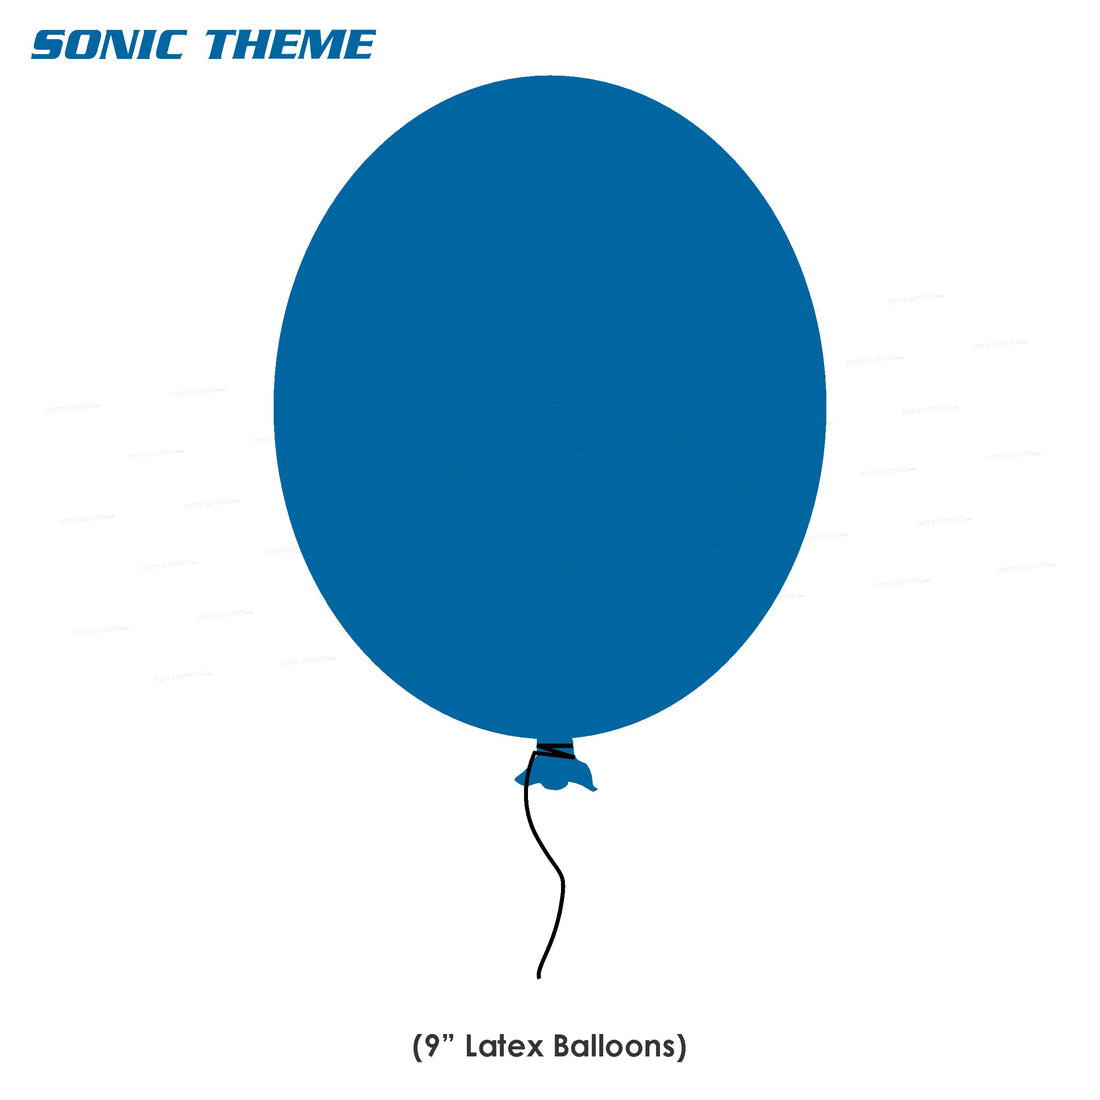 PSI Sonic the Hedgehog Theme Colour 60 Pcs. Balloons